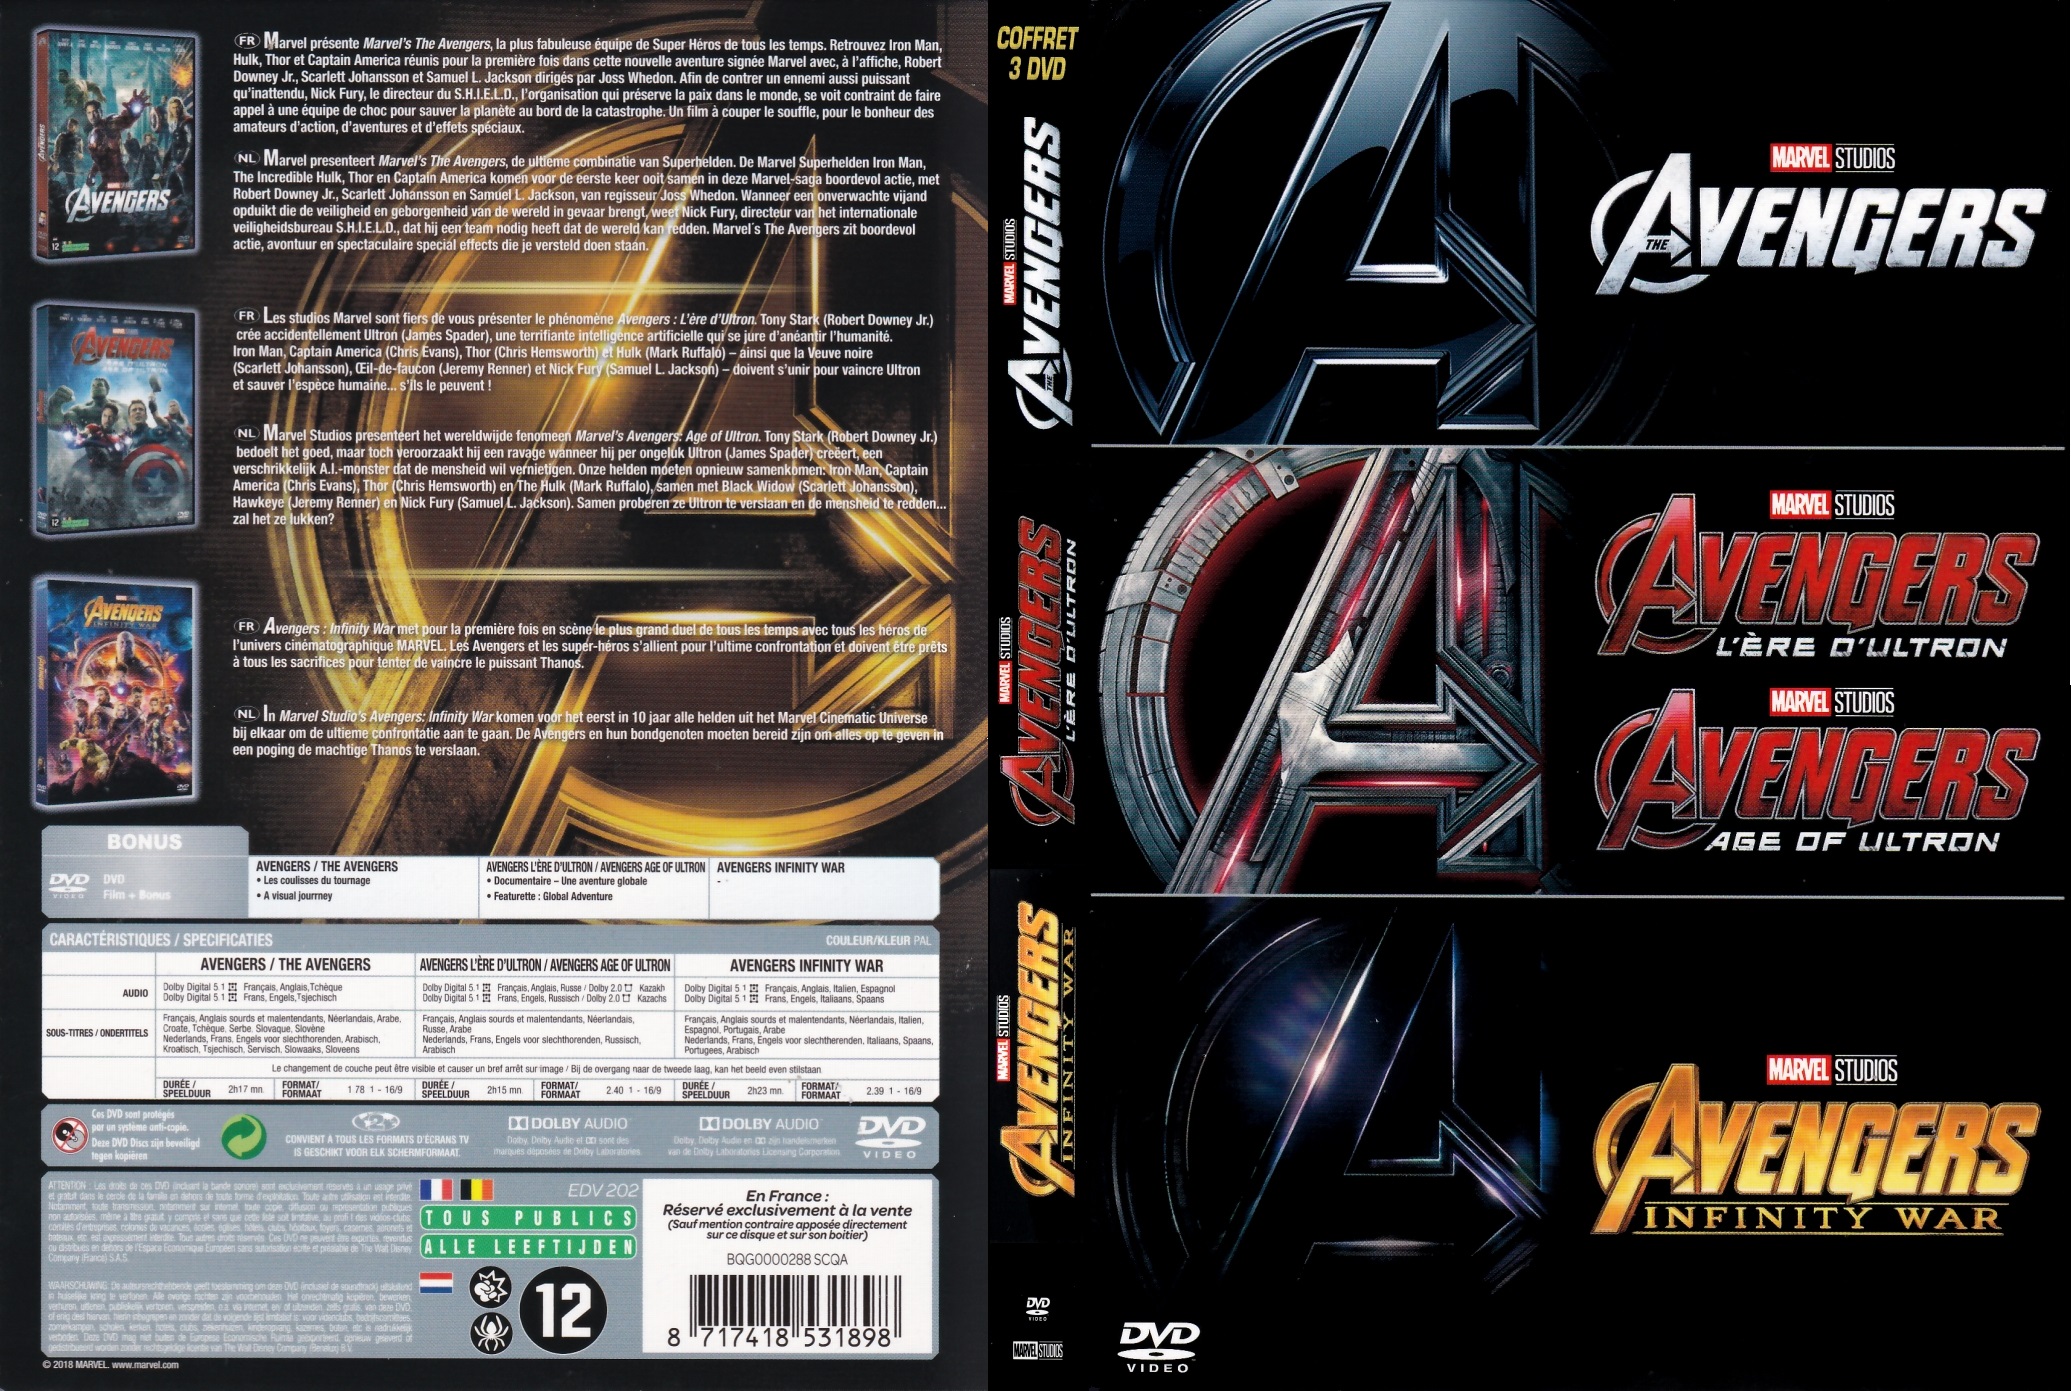 Jaquette DVD Avengers Trilogie custom